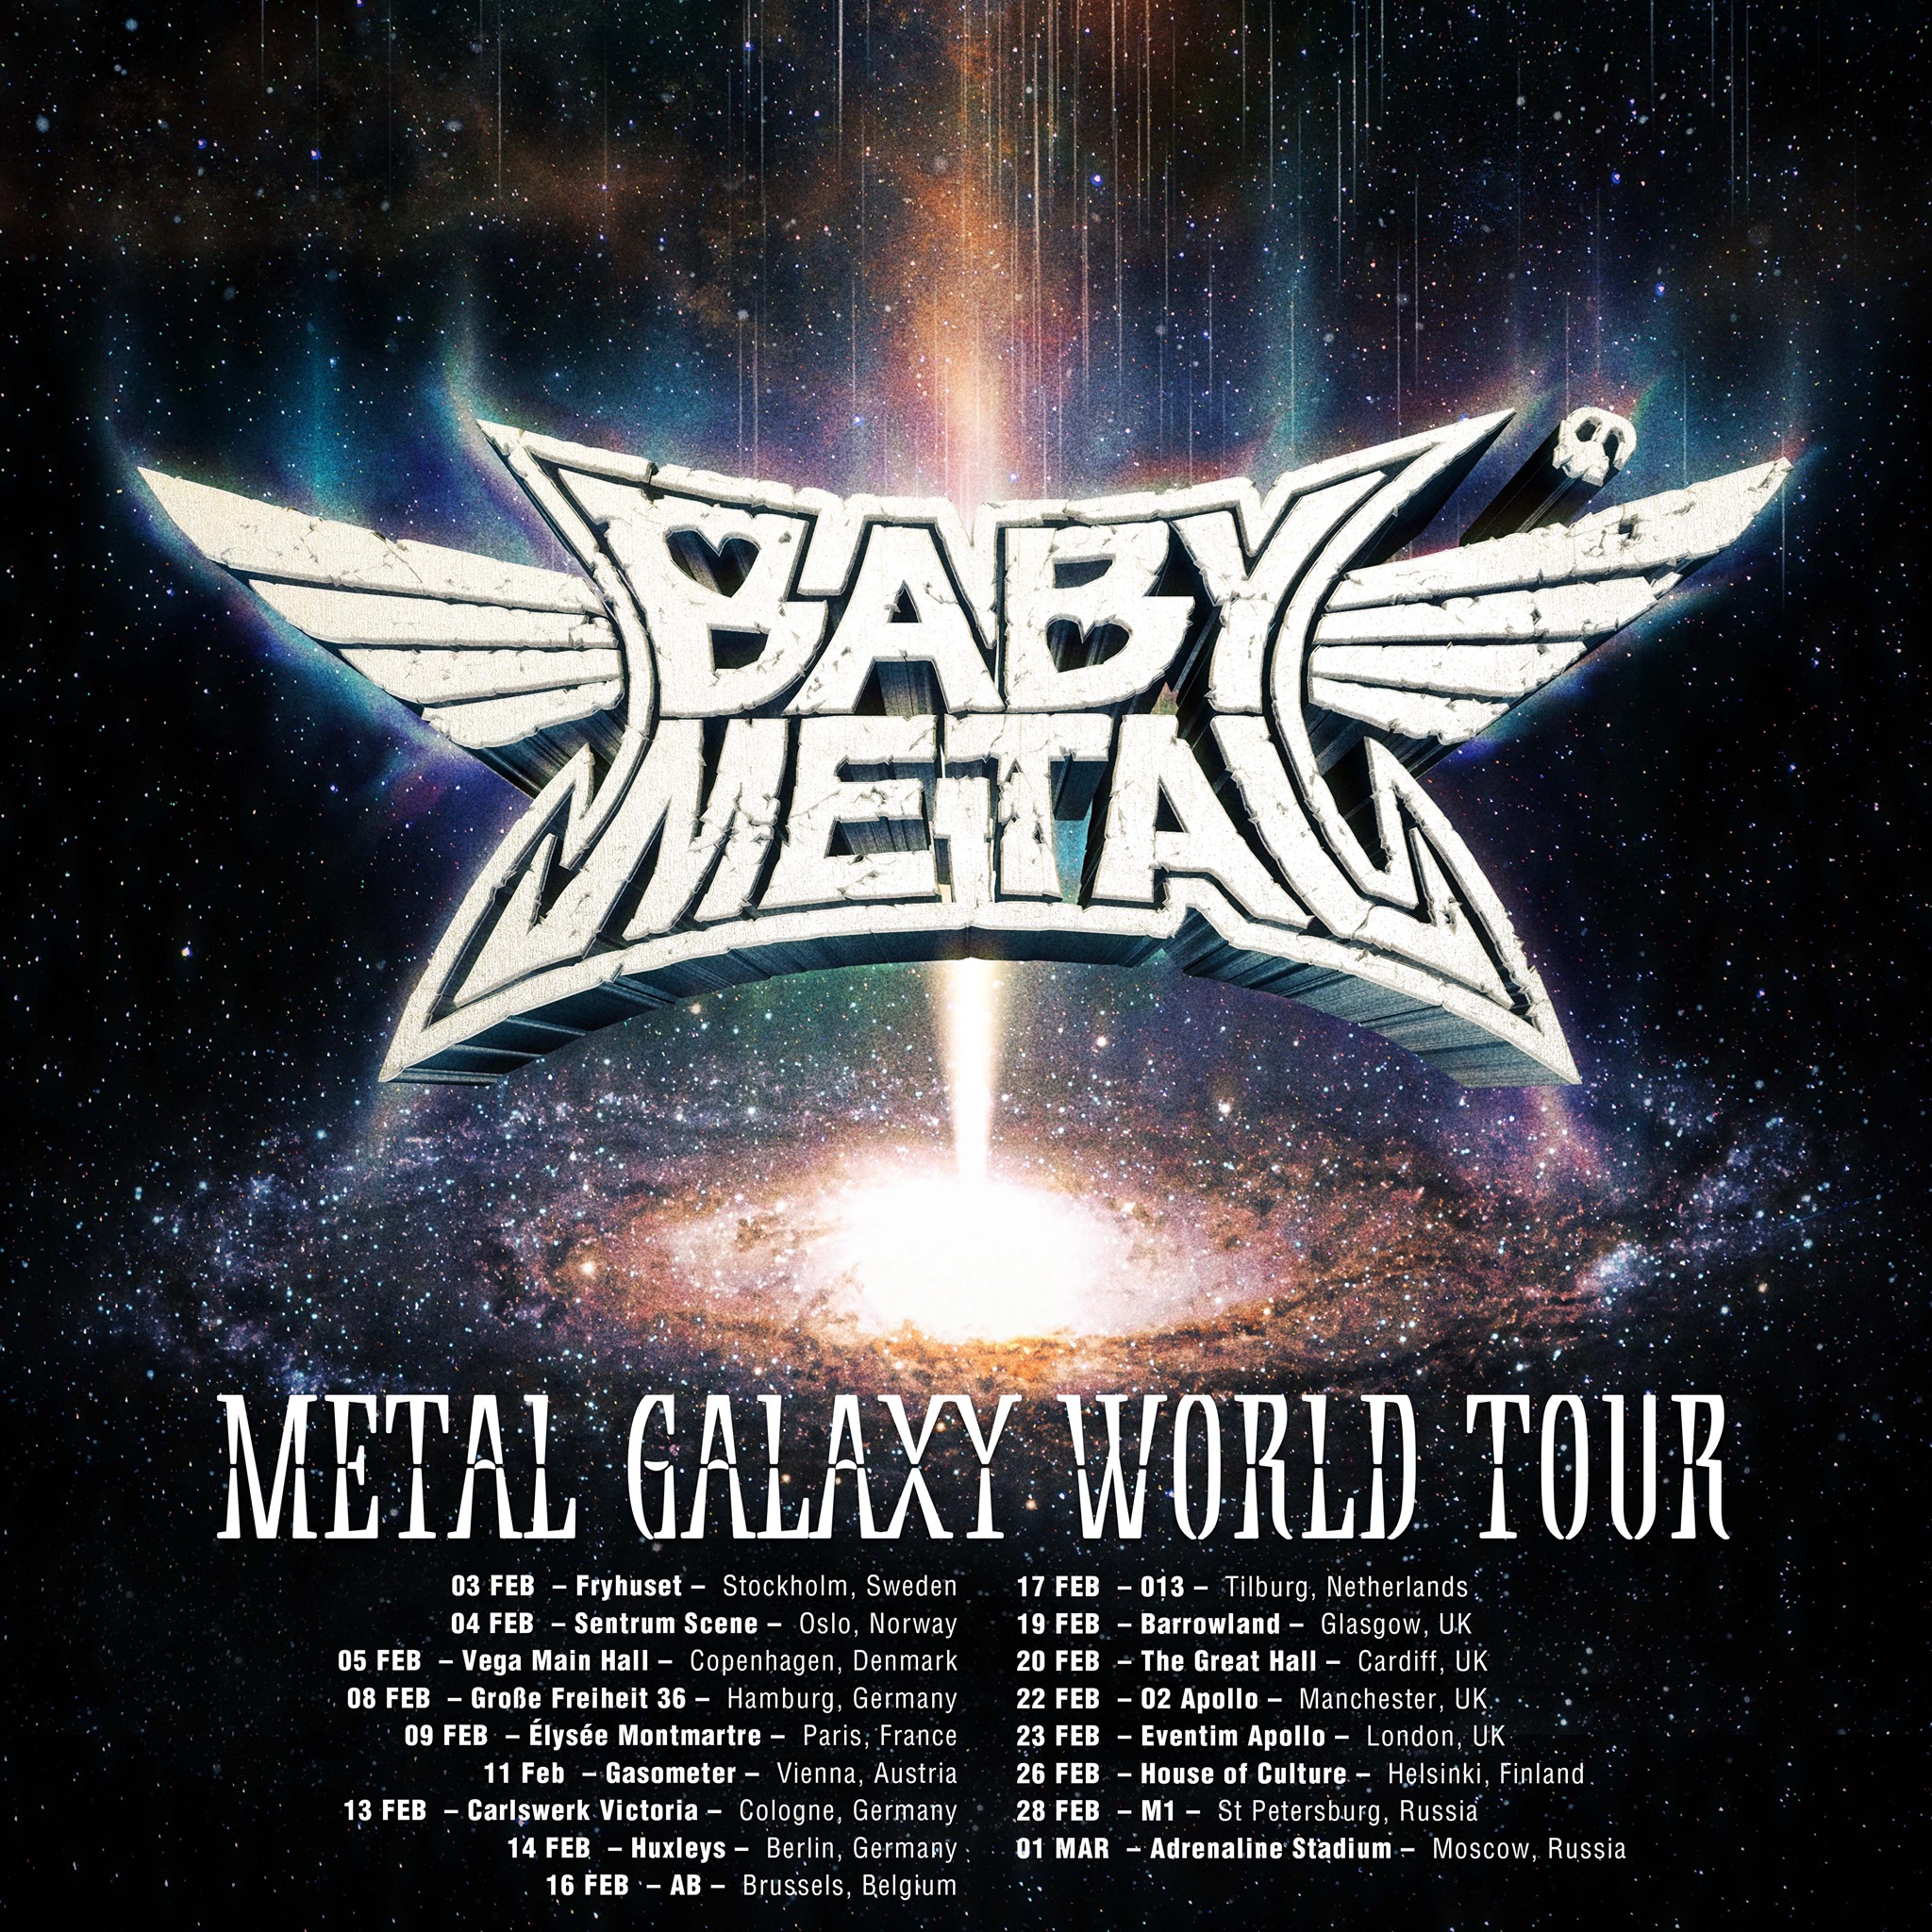 Babymetal-tour-announcement-metal-galaxy-world-tour-poster